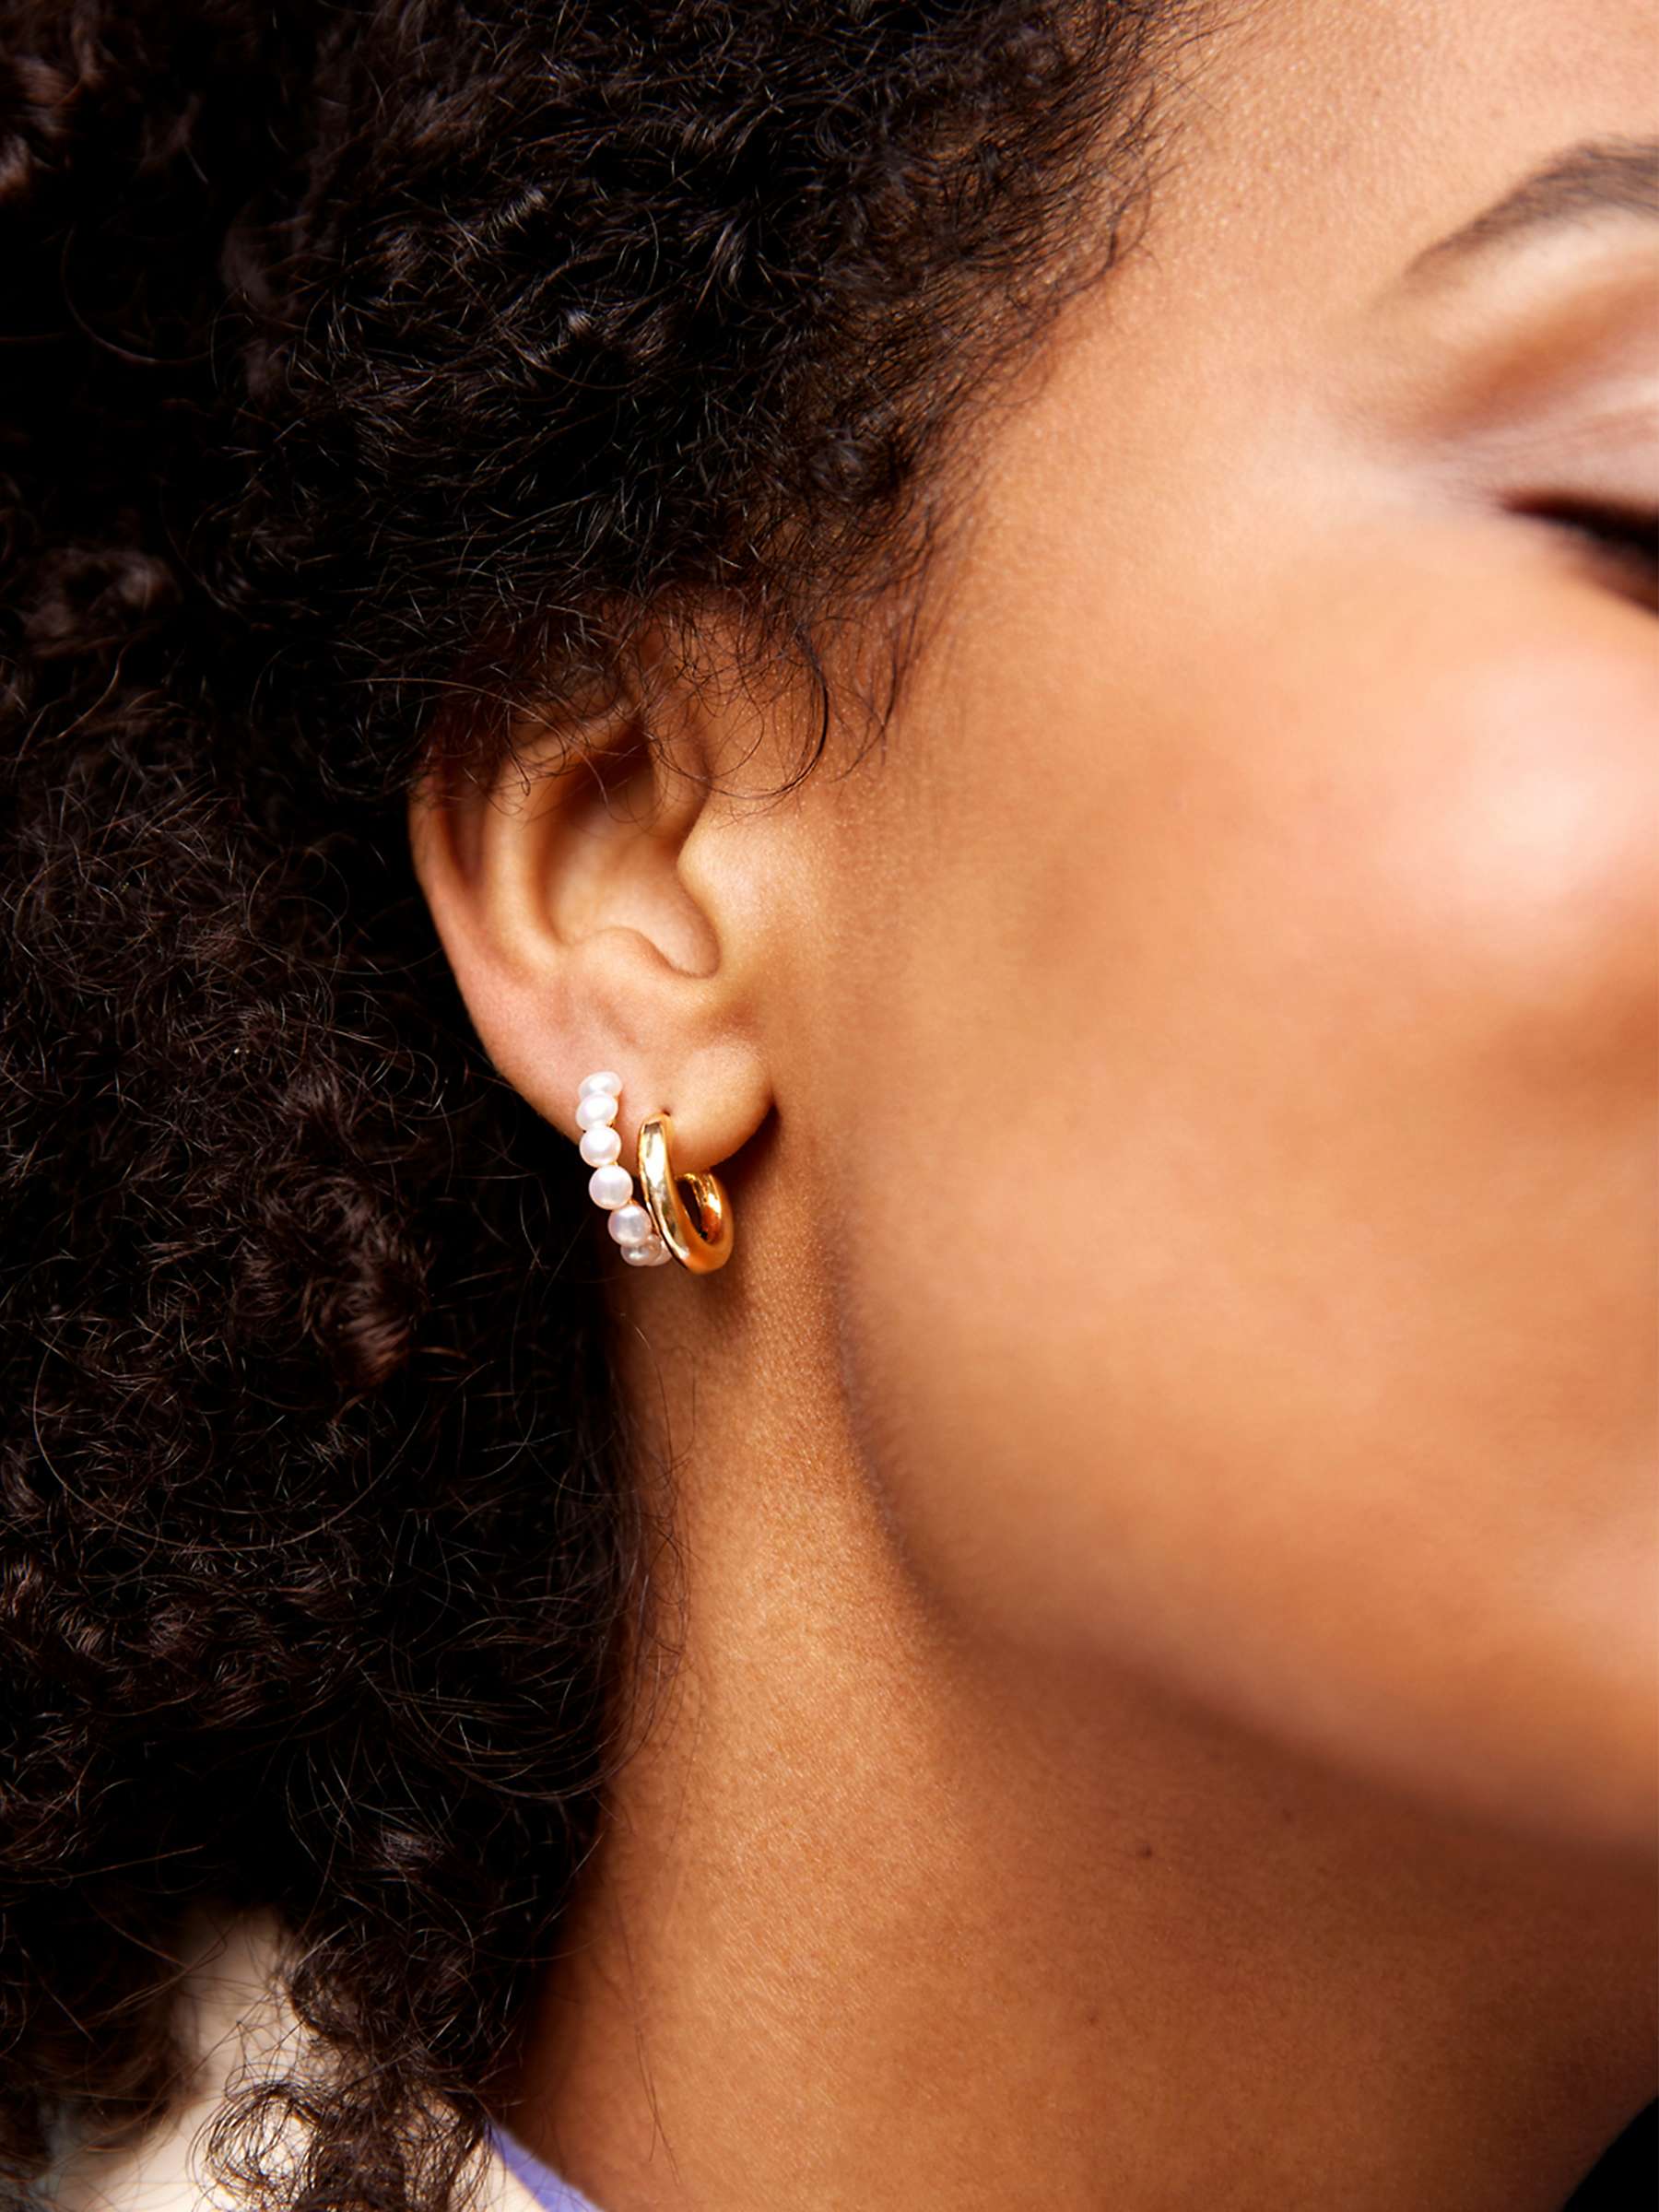 Buy Estella Bartlett The Edit Pearl Illusion Hoop Earrings, Gold/White Online at johnlewis.com